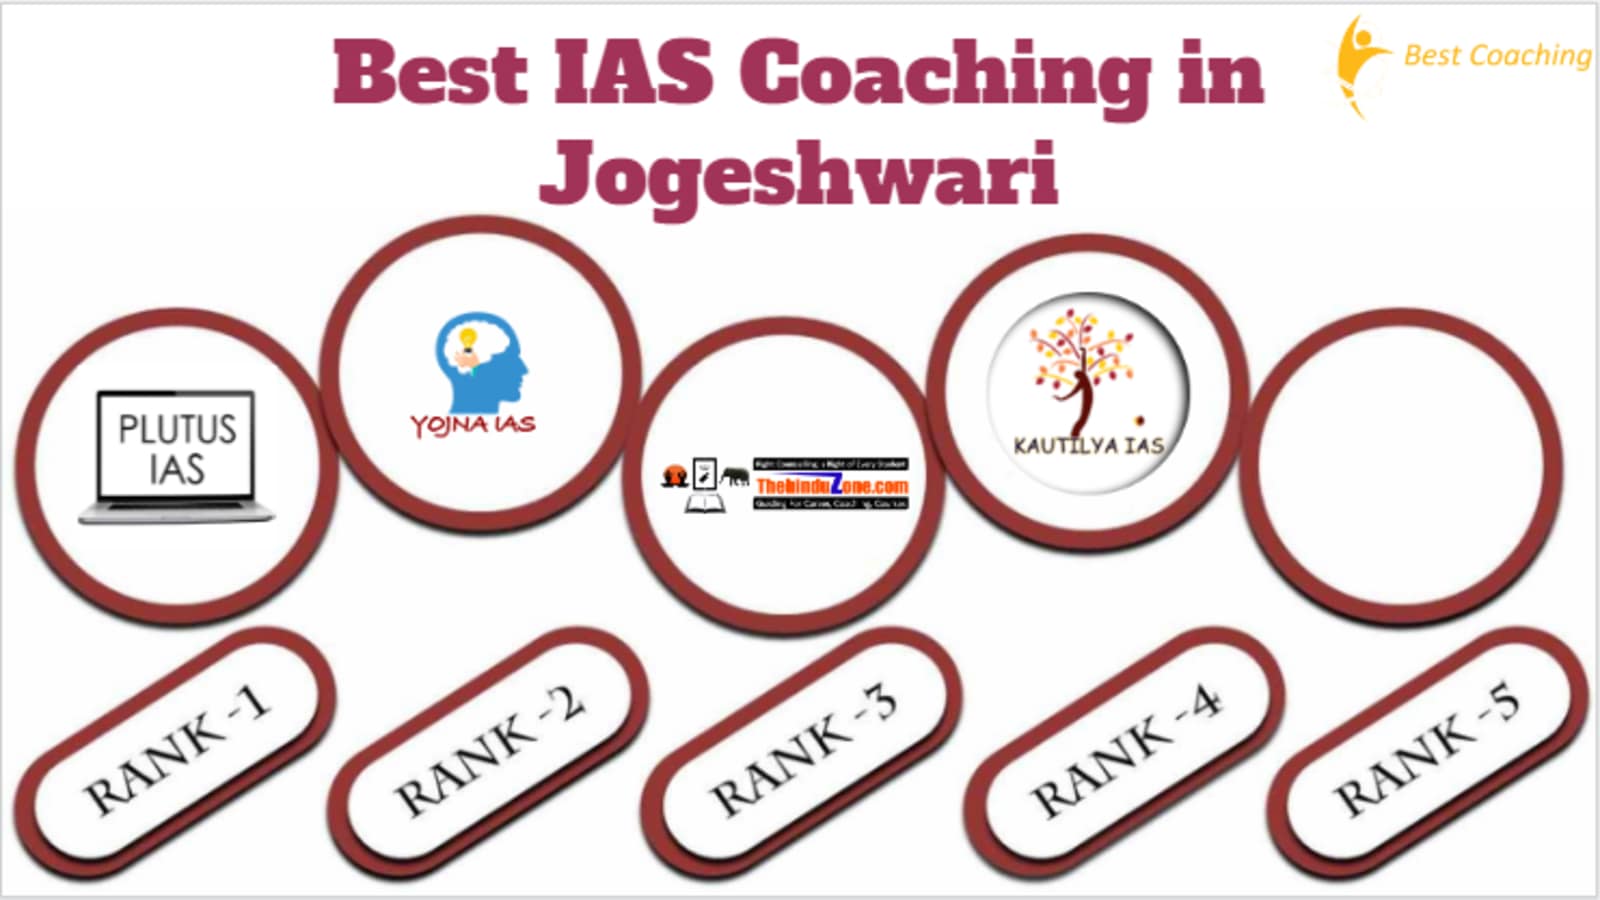 Top IAS Coaching in Jogeshwari